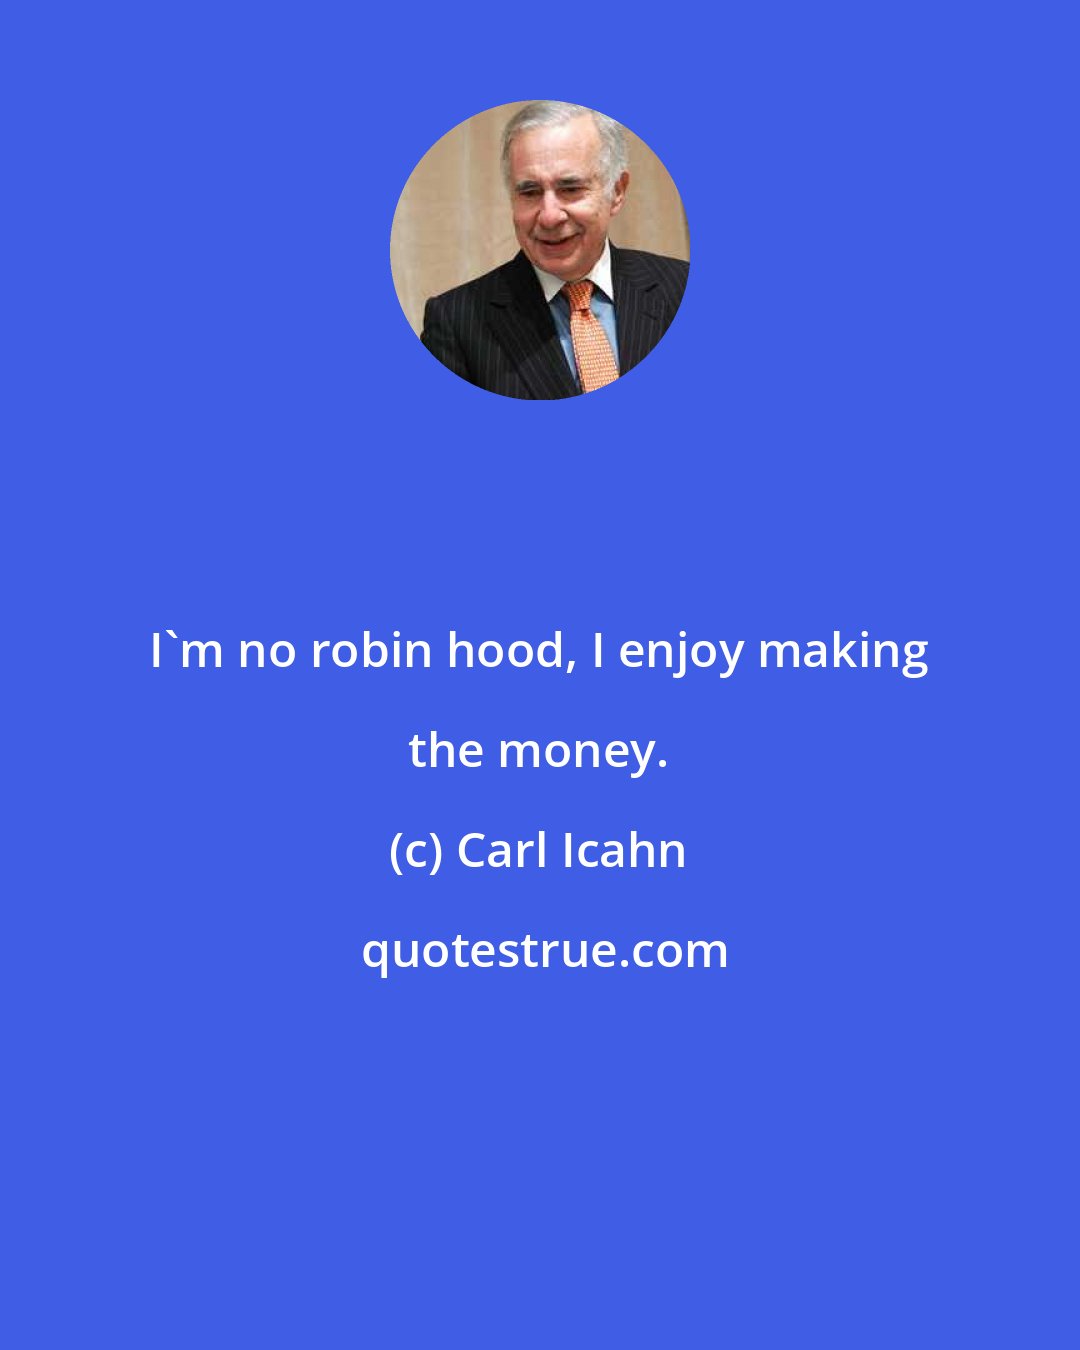 Carl Icahn: I'm no robin hood, I enjoy making the money.